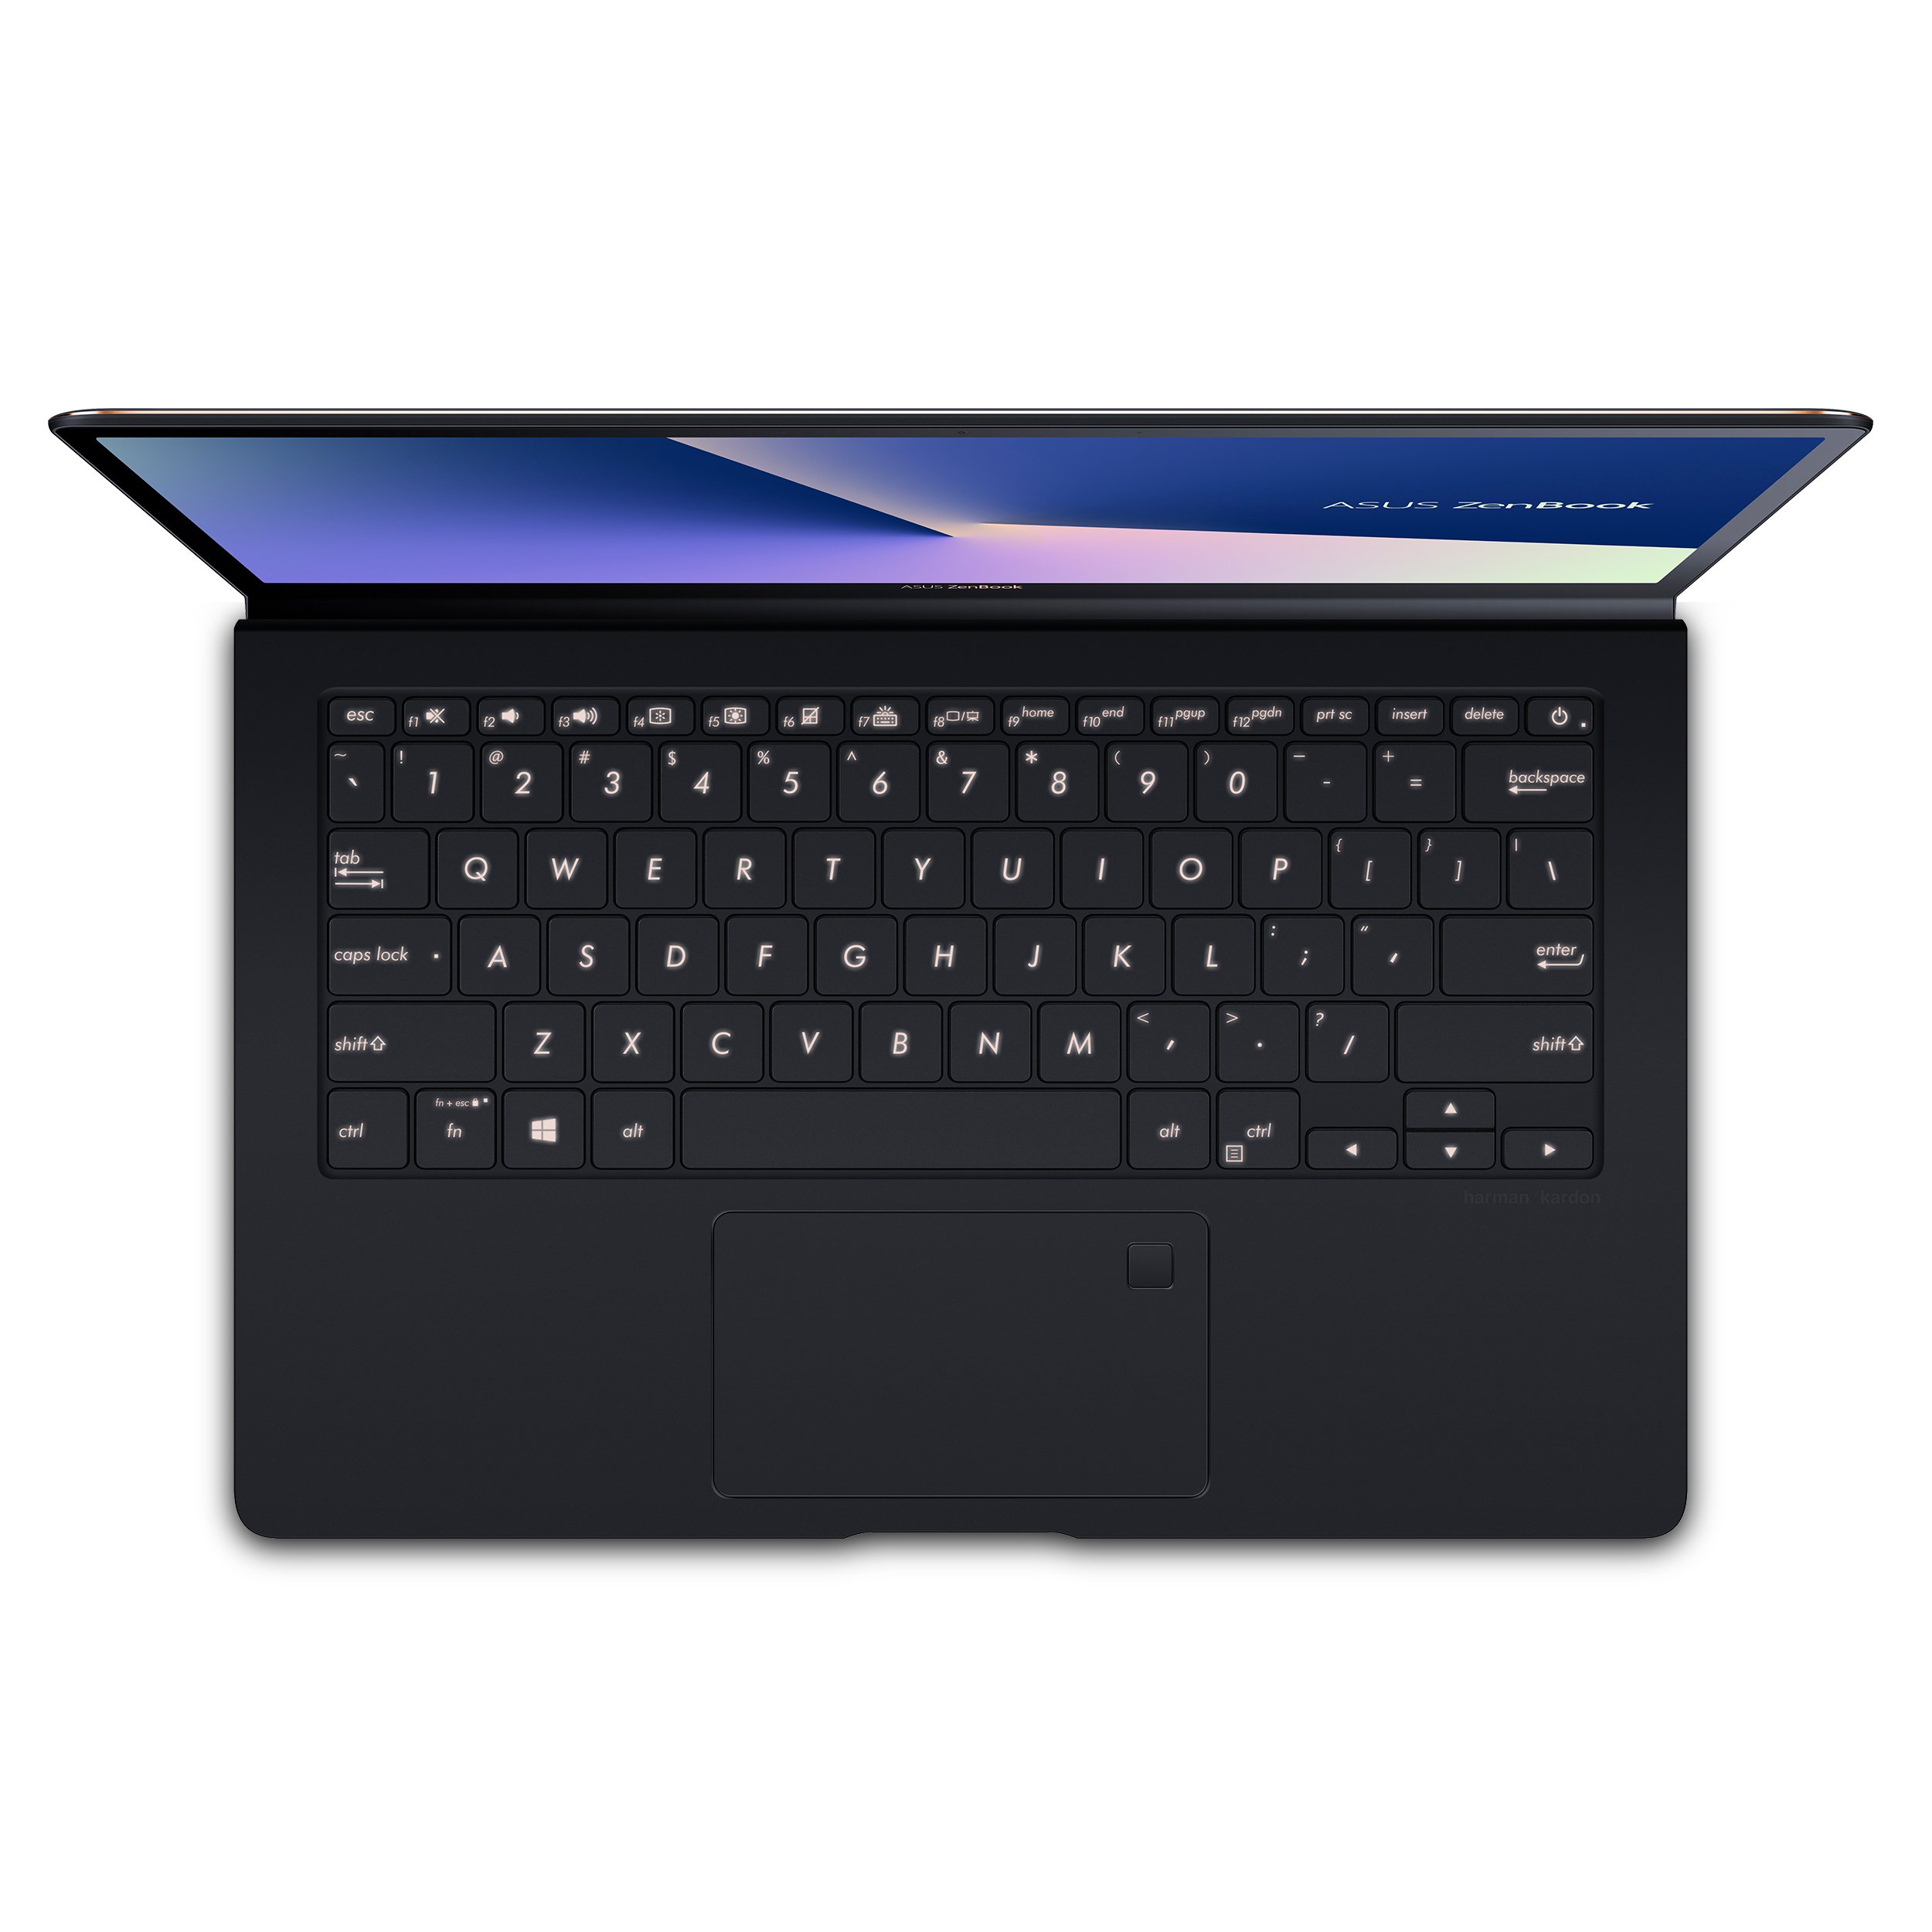 ASUS ZenBook S Ultra-Thin and Light Laptop, 13.3” UHD 4K Touch, 8th Gen Intel Core i7-8565U Processor, 16GB RAM, 512GB PCIe SSD, FP Sensor, Thunderbolt, Windows 10 Professional - UX391FA-XH74T